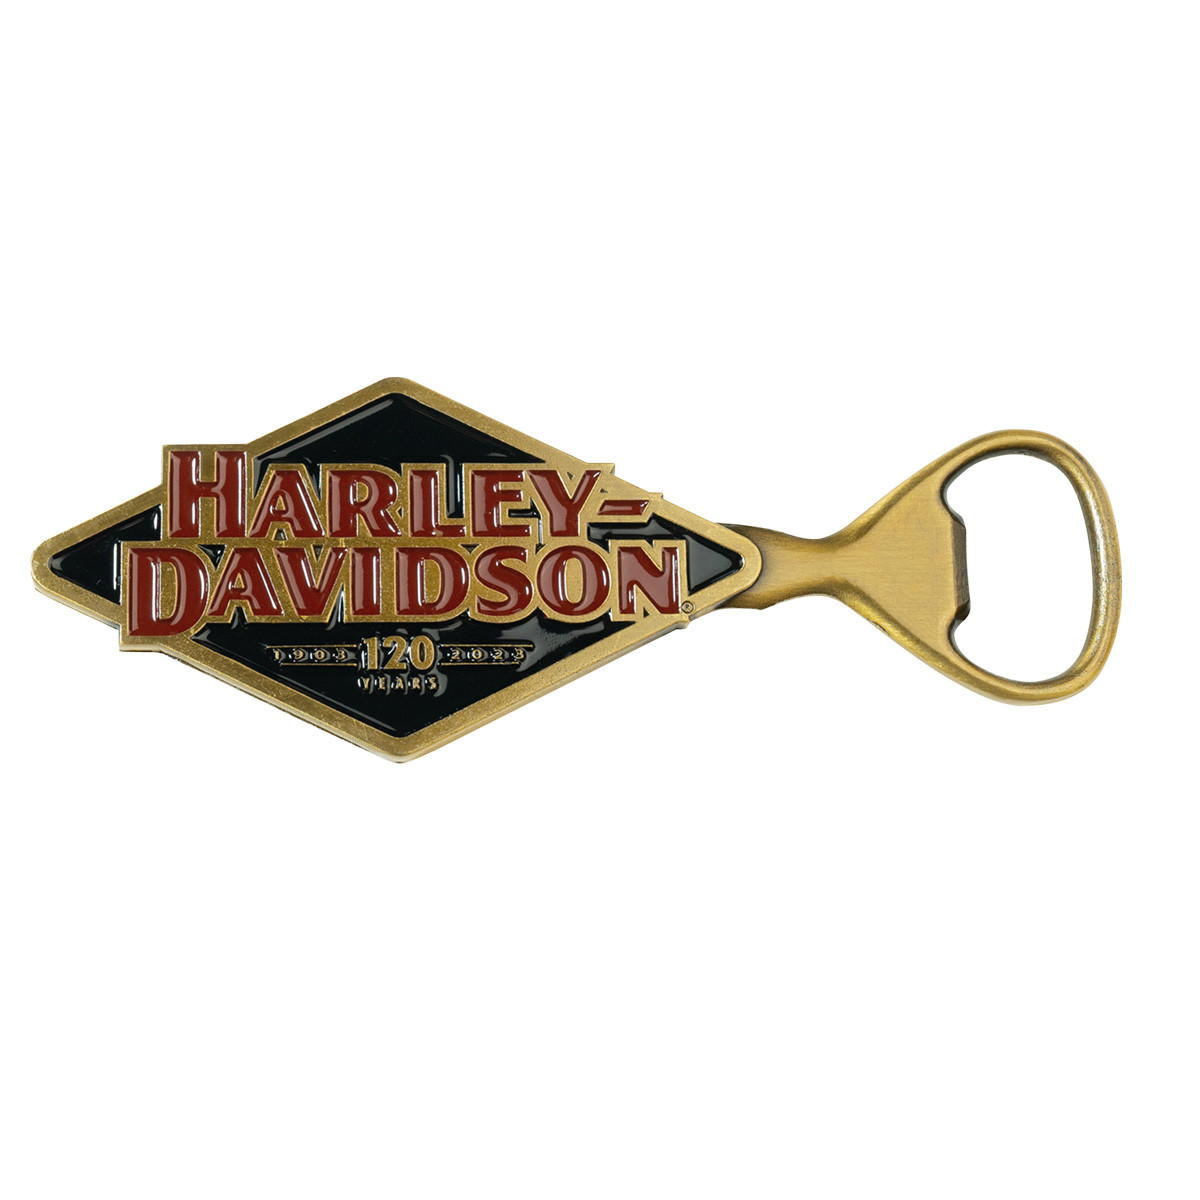 HARLEY DAVIDSON 120TH ANNIVERSARY BOTTLE OPENER